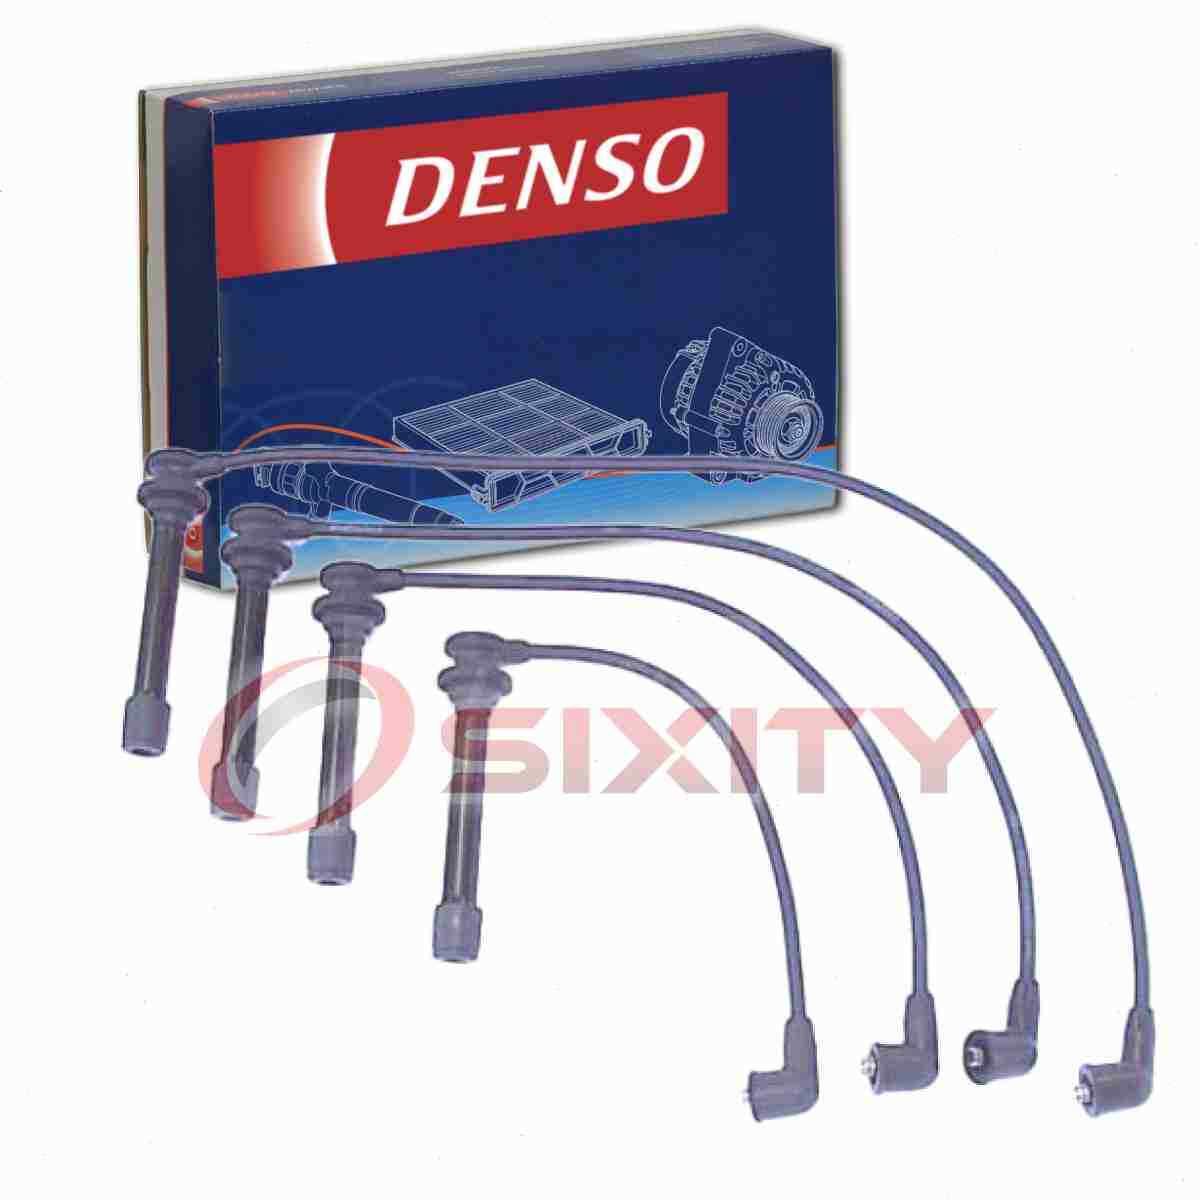 DENSO 671-4198 Spark Plug Wire Set for QW1170 NX15 MSW1616 CH74171 97056 ec